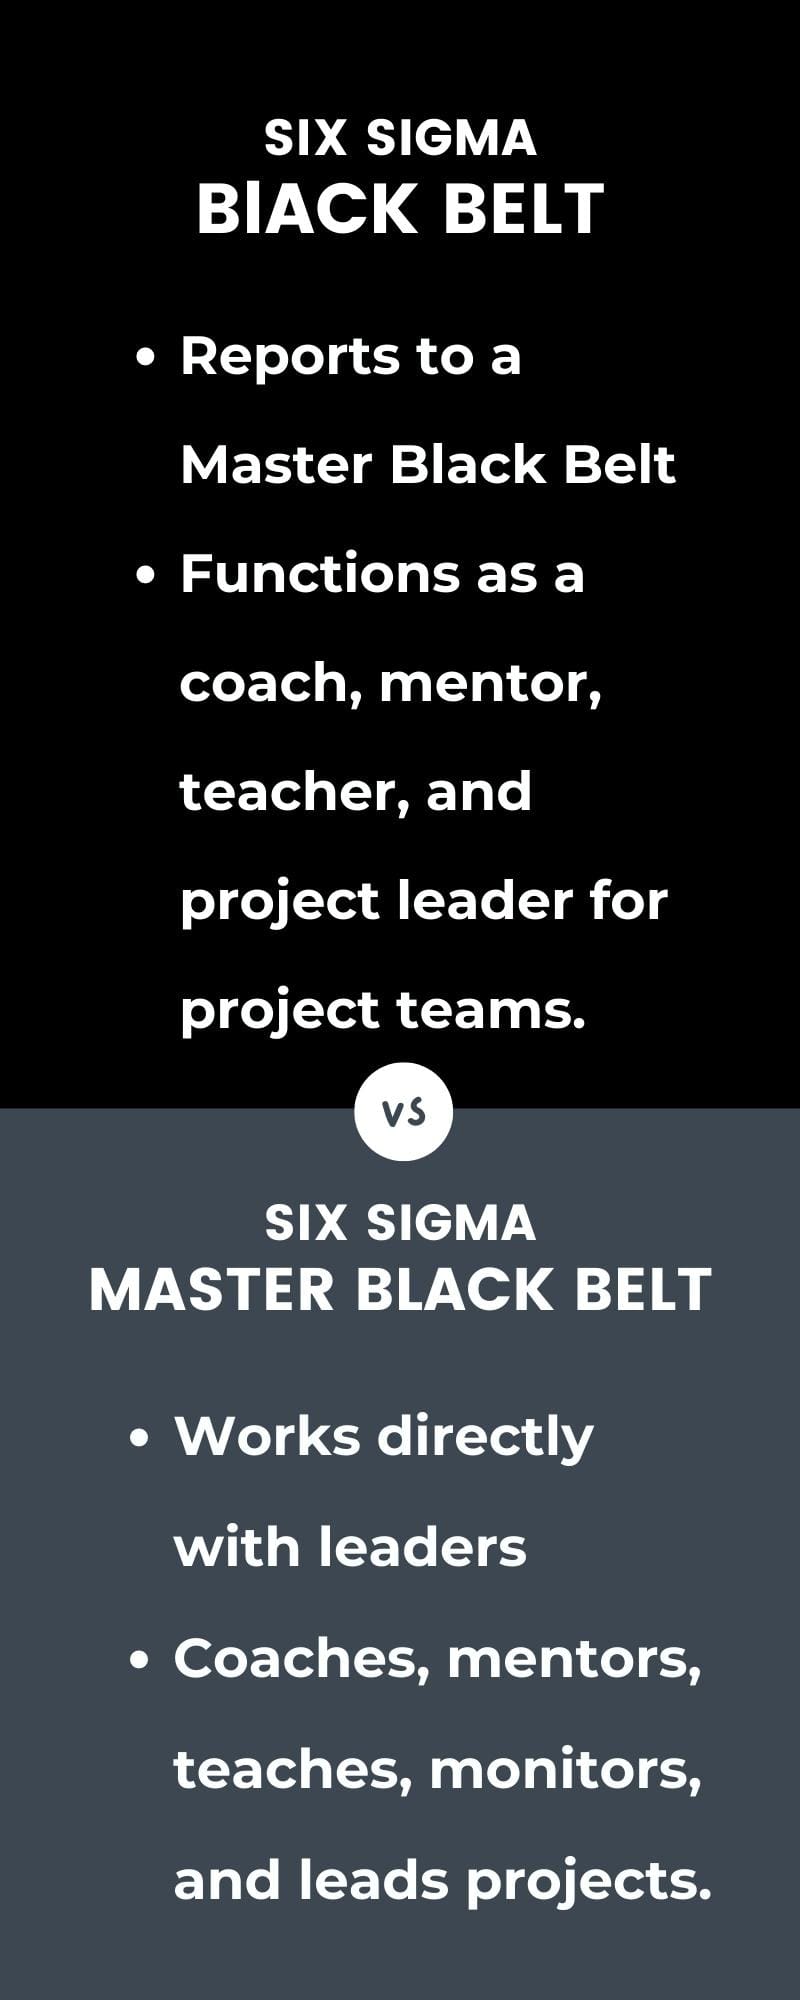 Six Sigma Black Belt vs. Master Black Belt